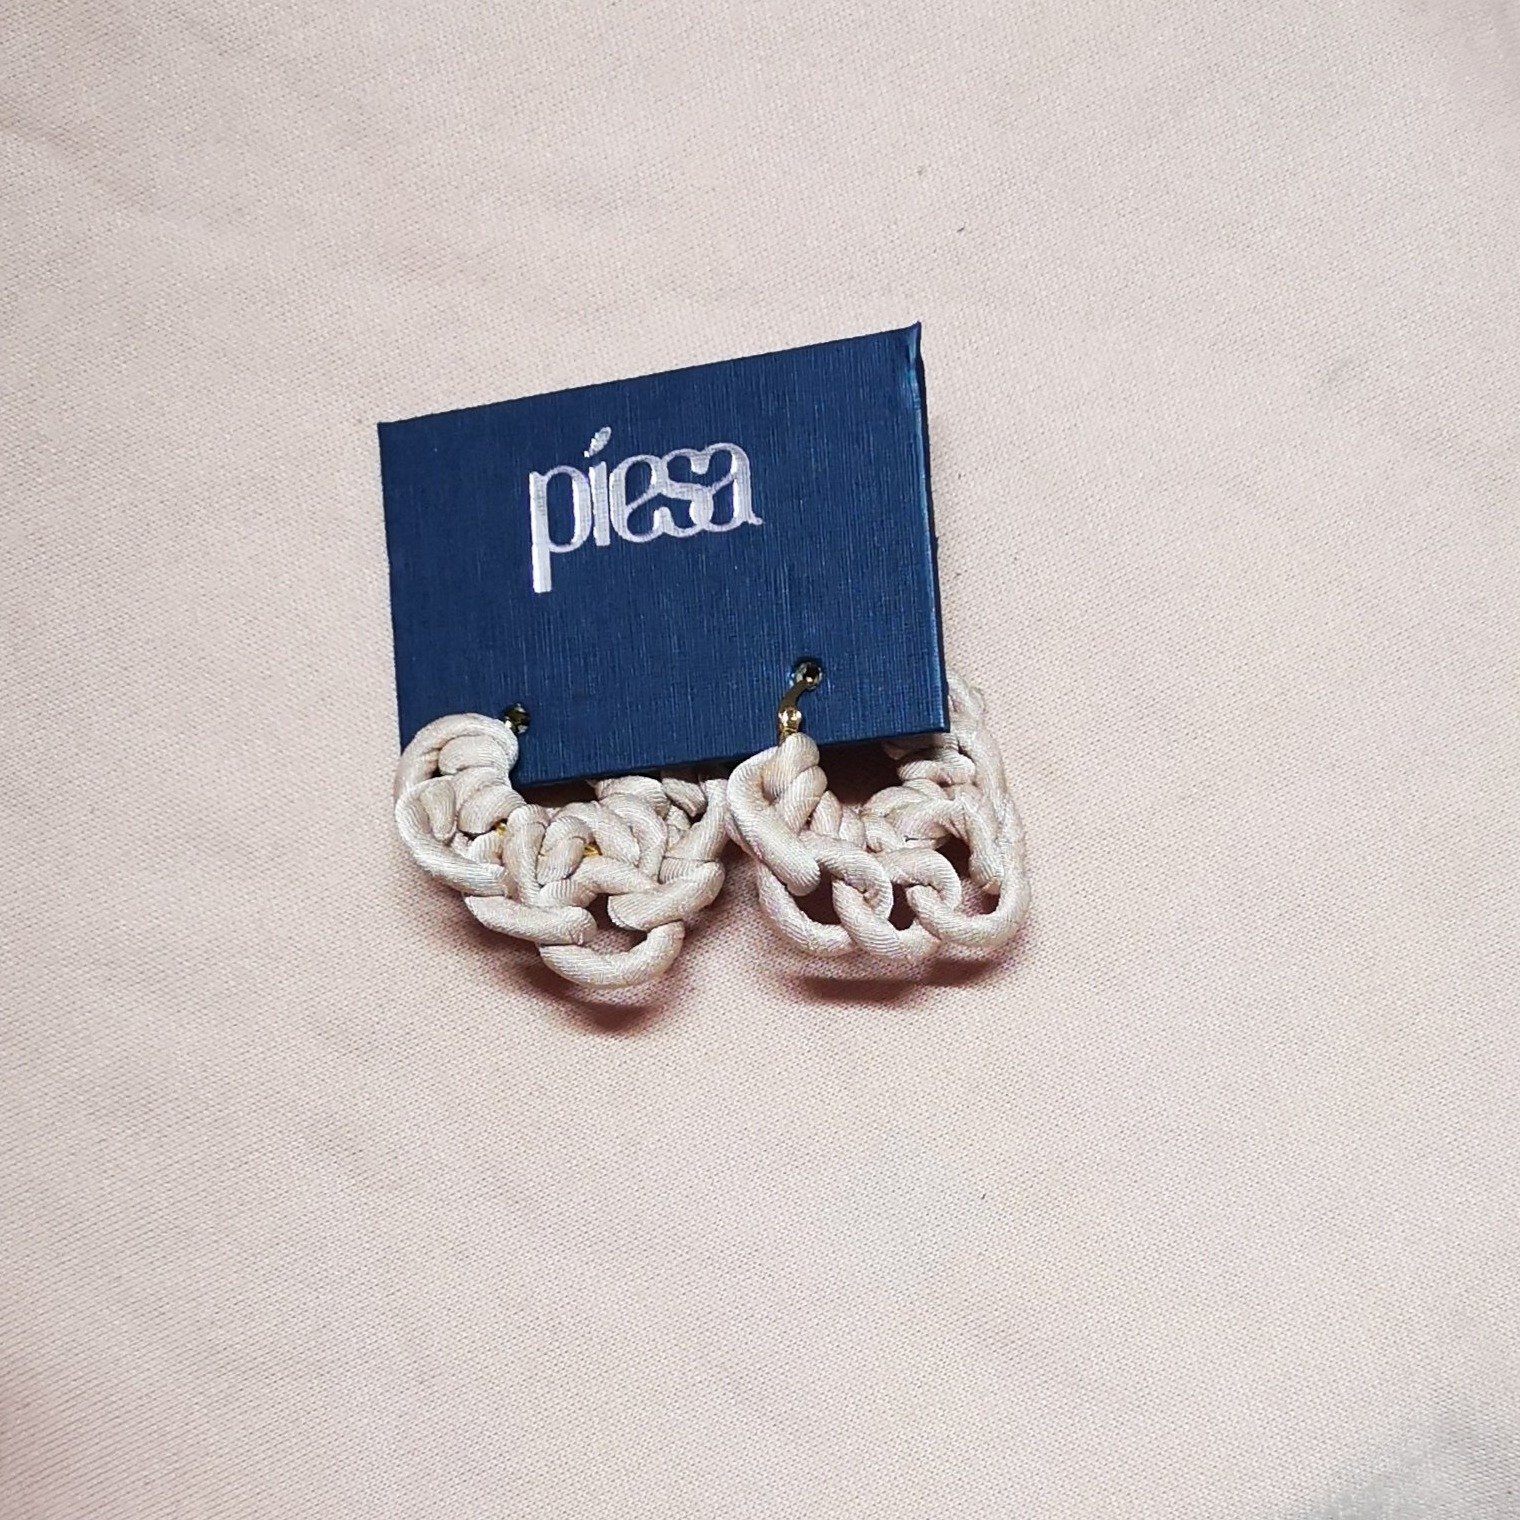 Philippa Petite Earrings Fashion Piesa